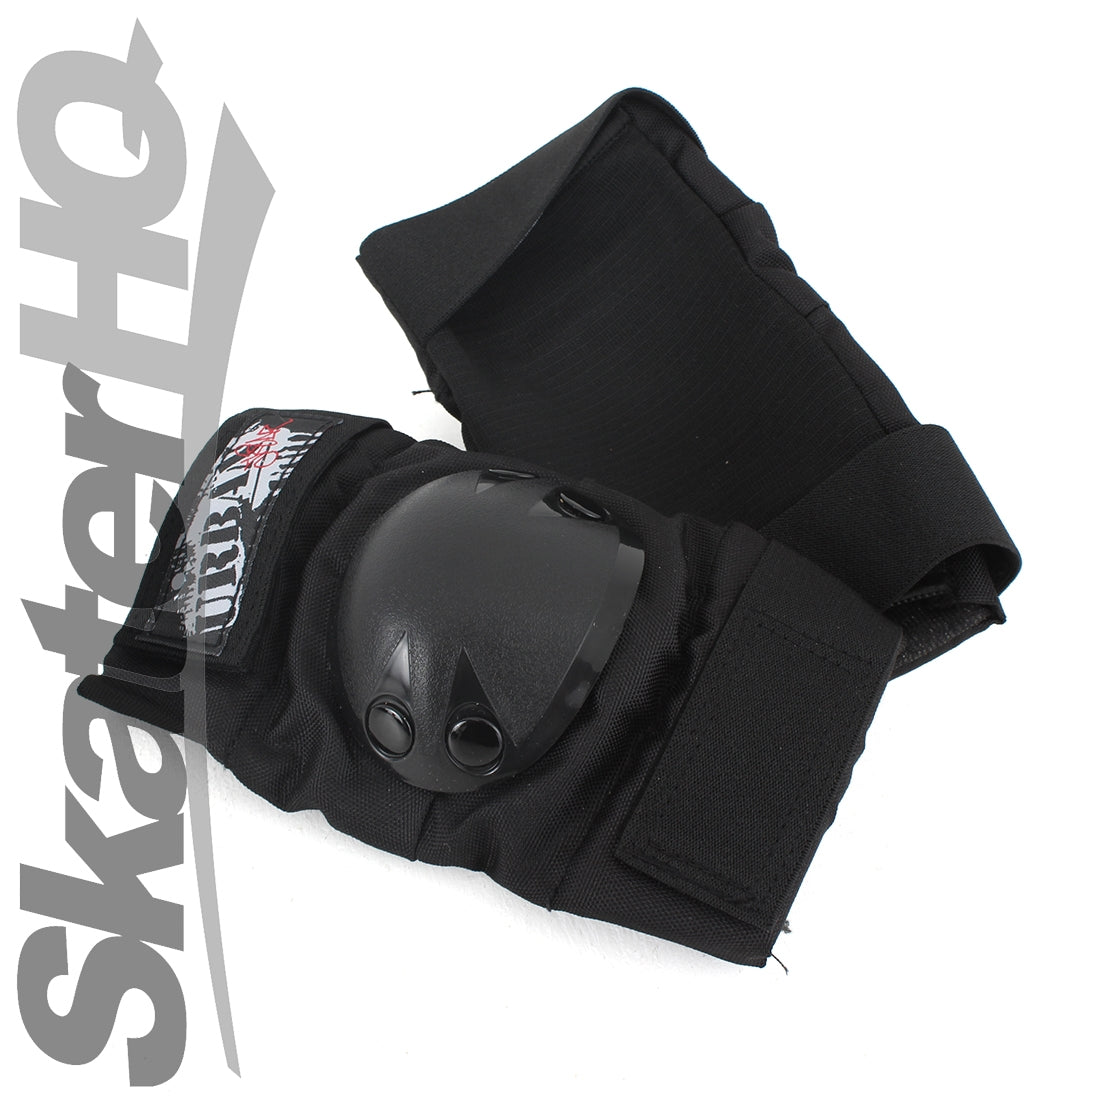 Urban Skater Tri Pack Black - Large Protective Gear